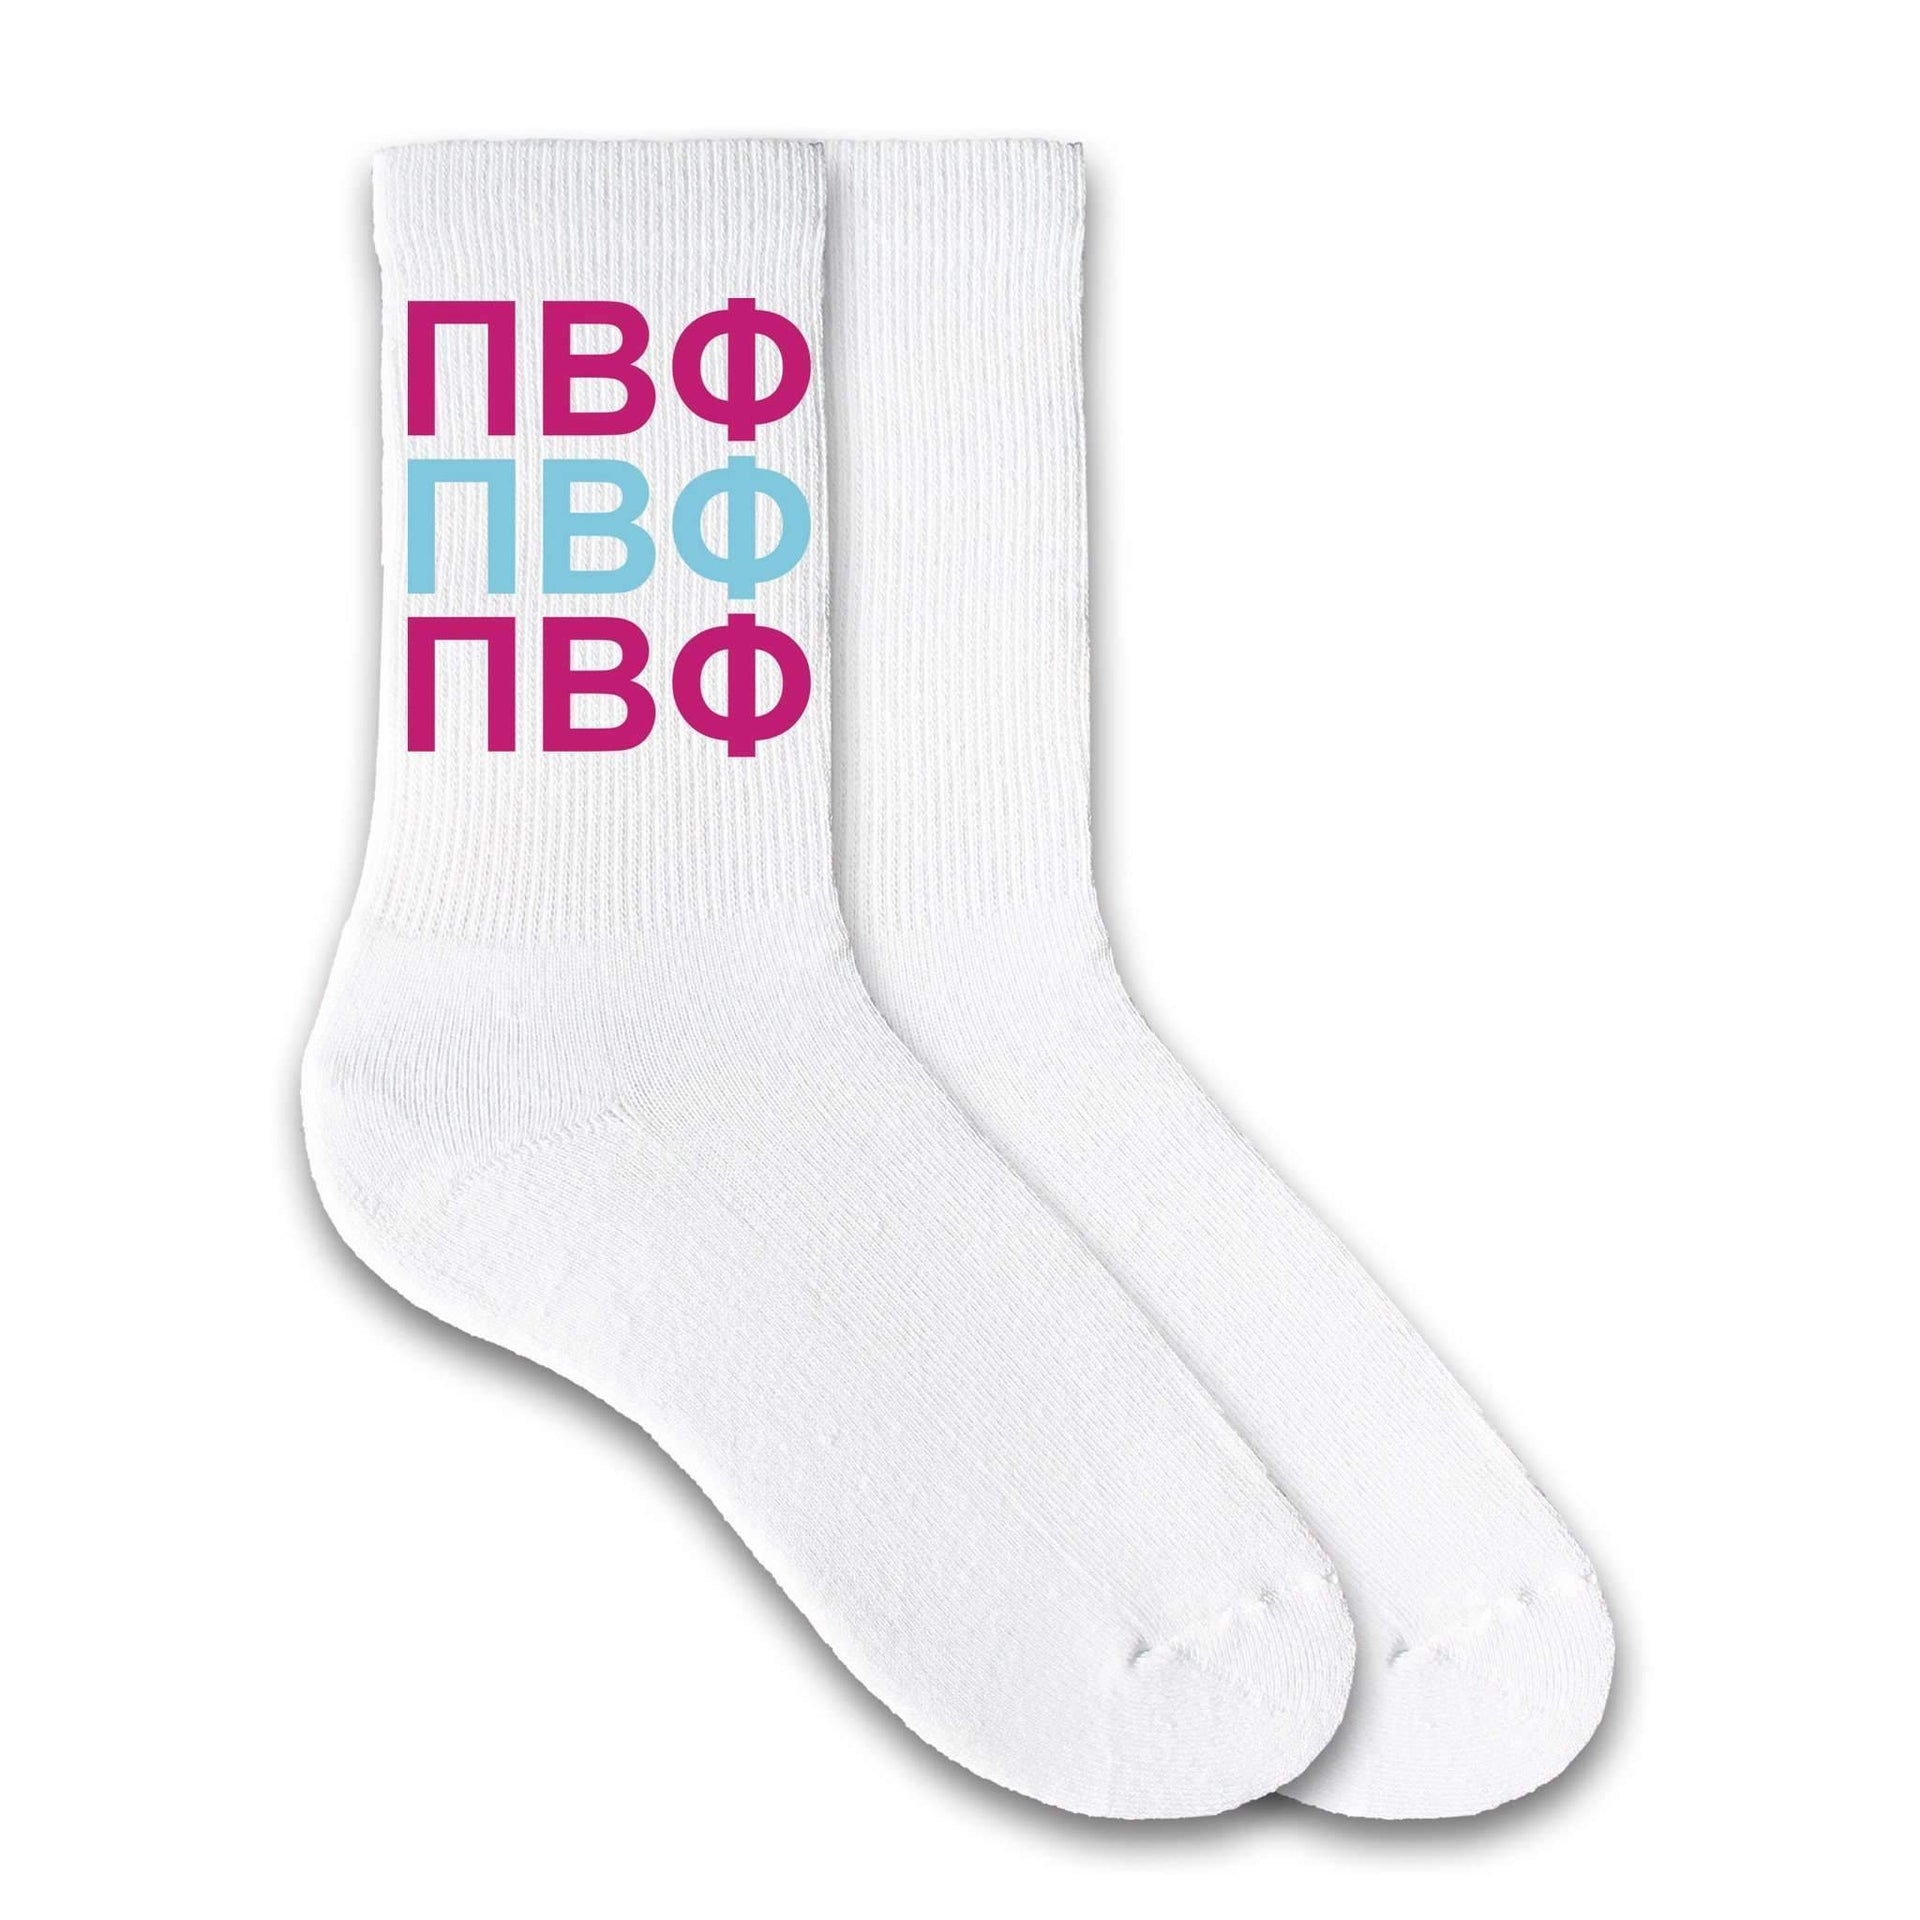 Pi Beta Phi sorority letters repeating design custom printed on white cotton crew socks